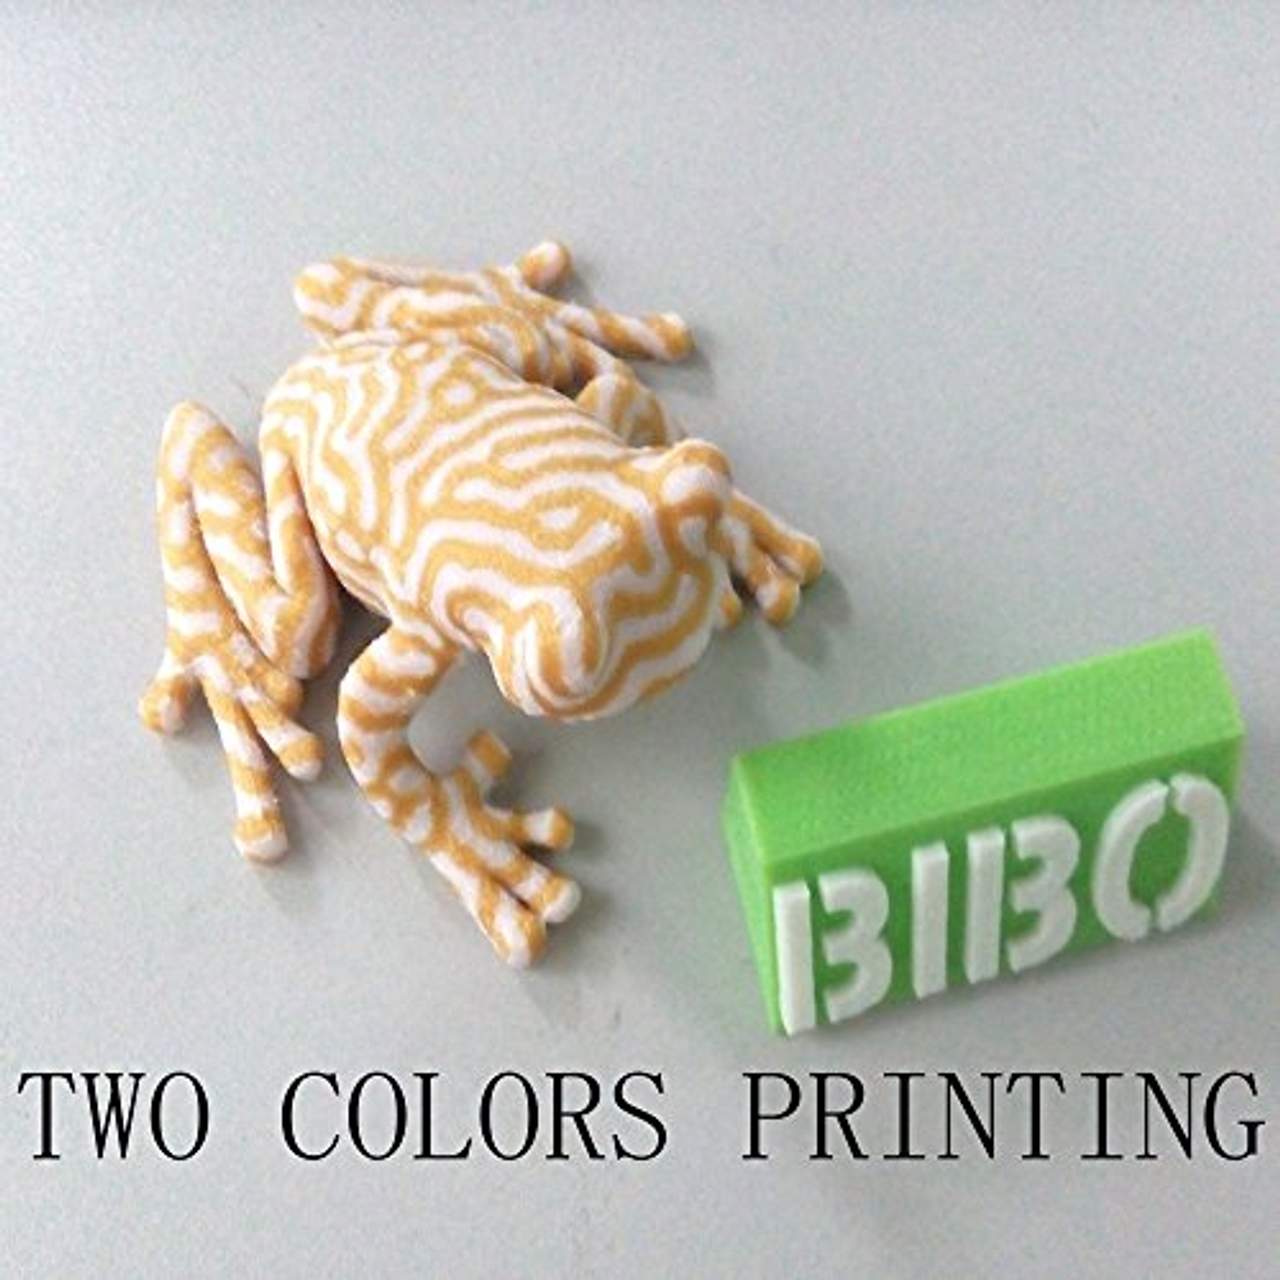 BIBO 2 Touch 3D-Drucker